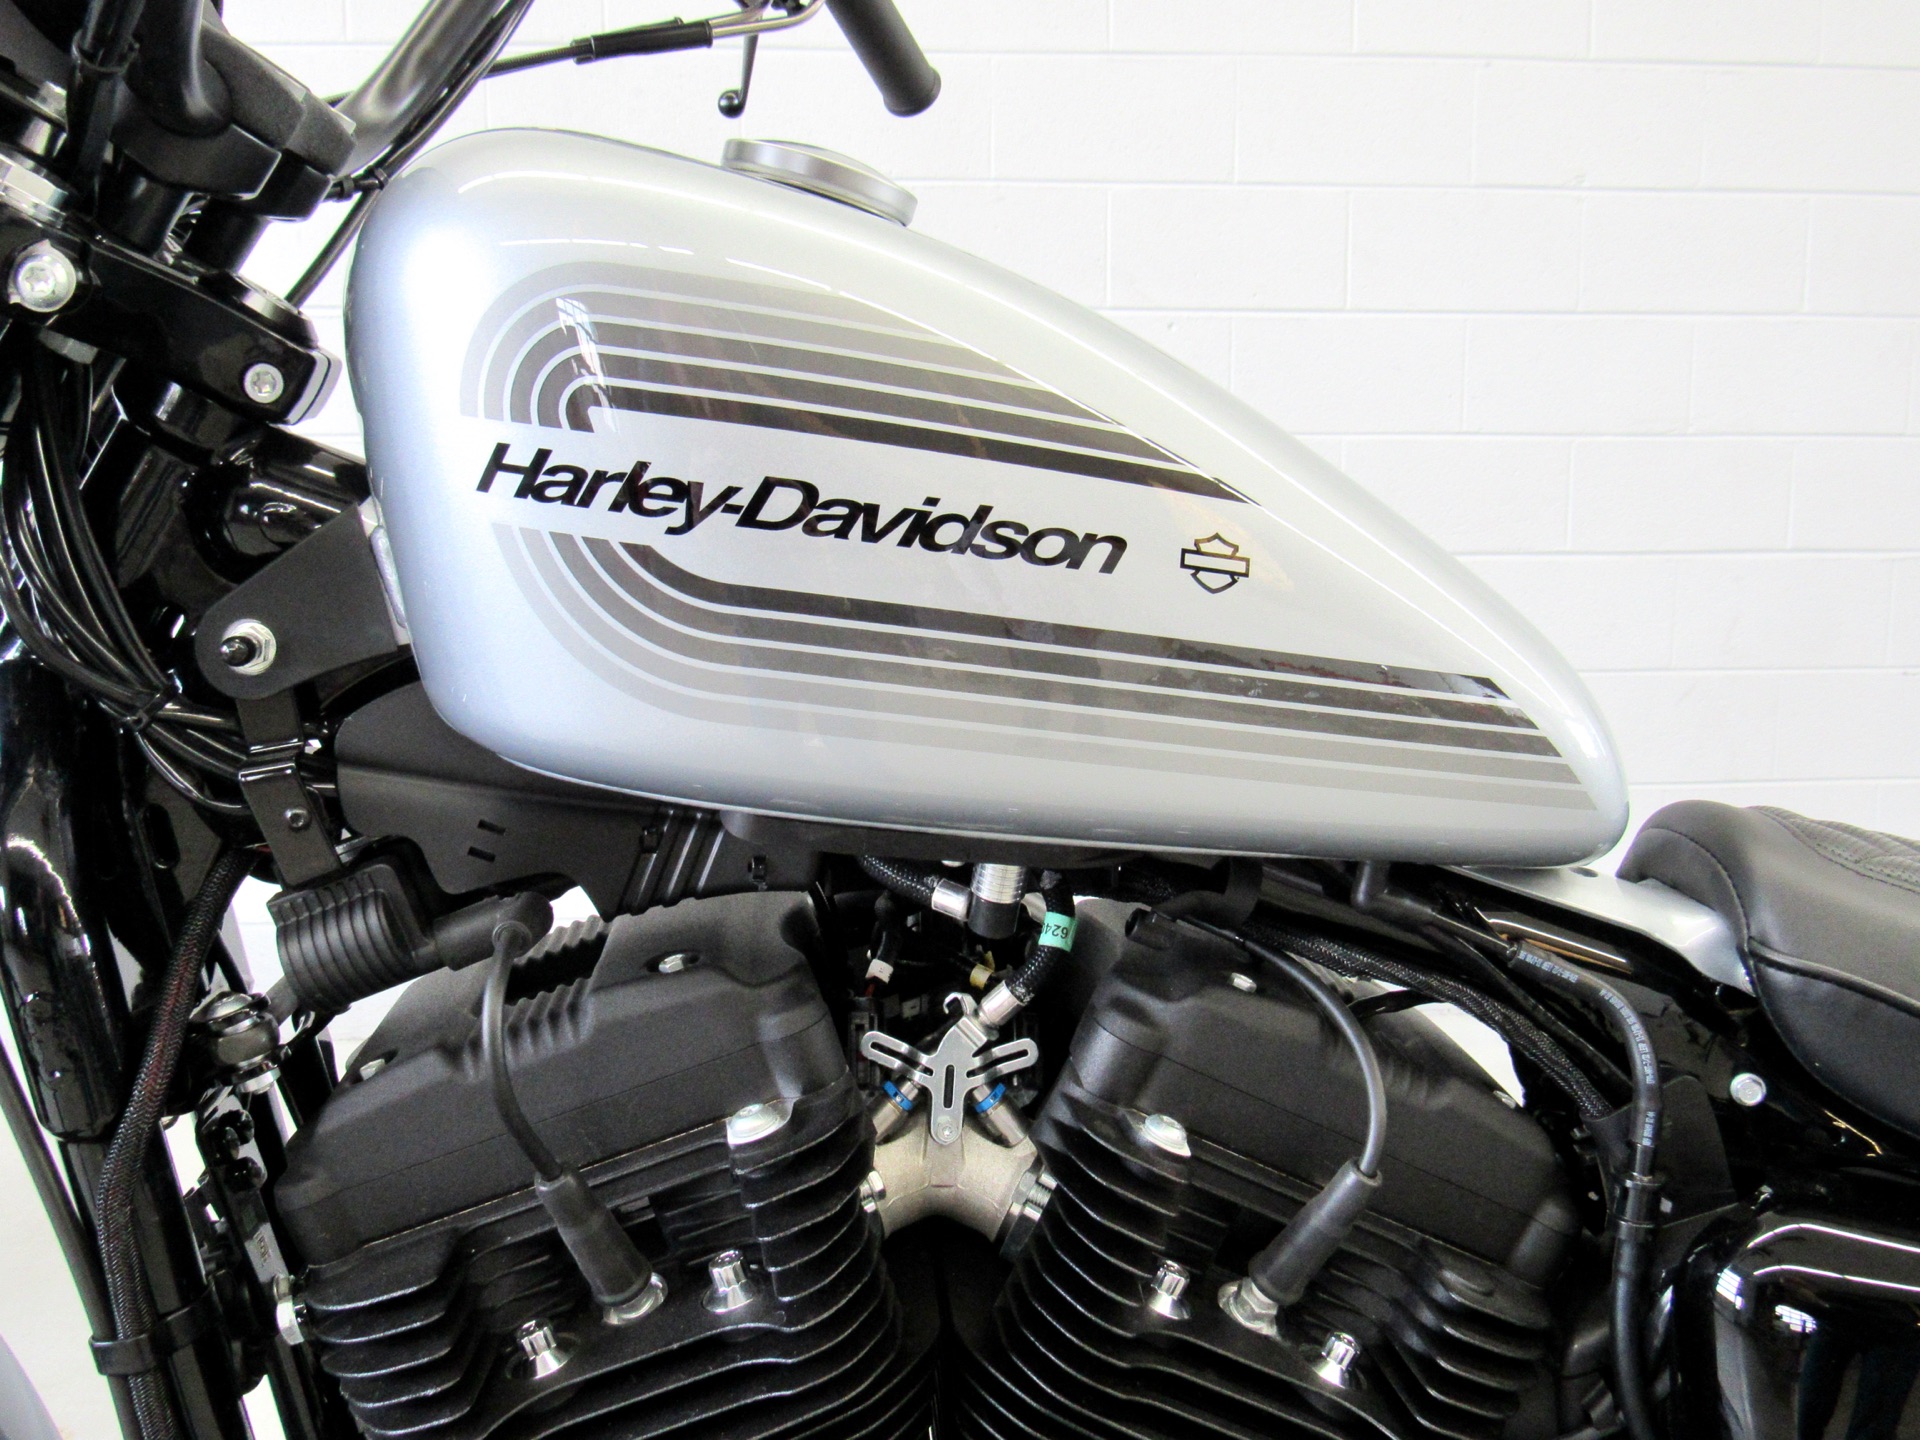 2020 Harley-Davidson Iron 1200™ in Fredericksburg, Virginia - Photo 18